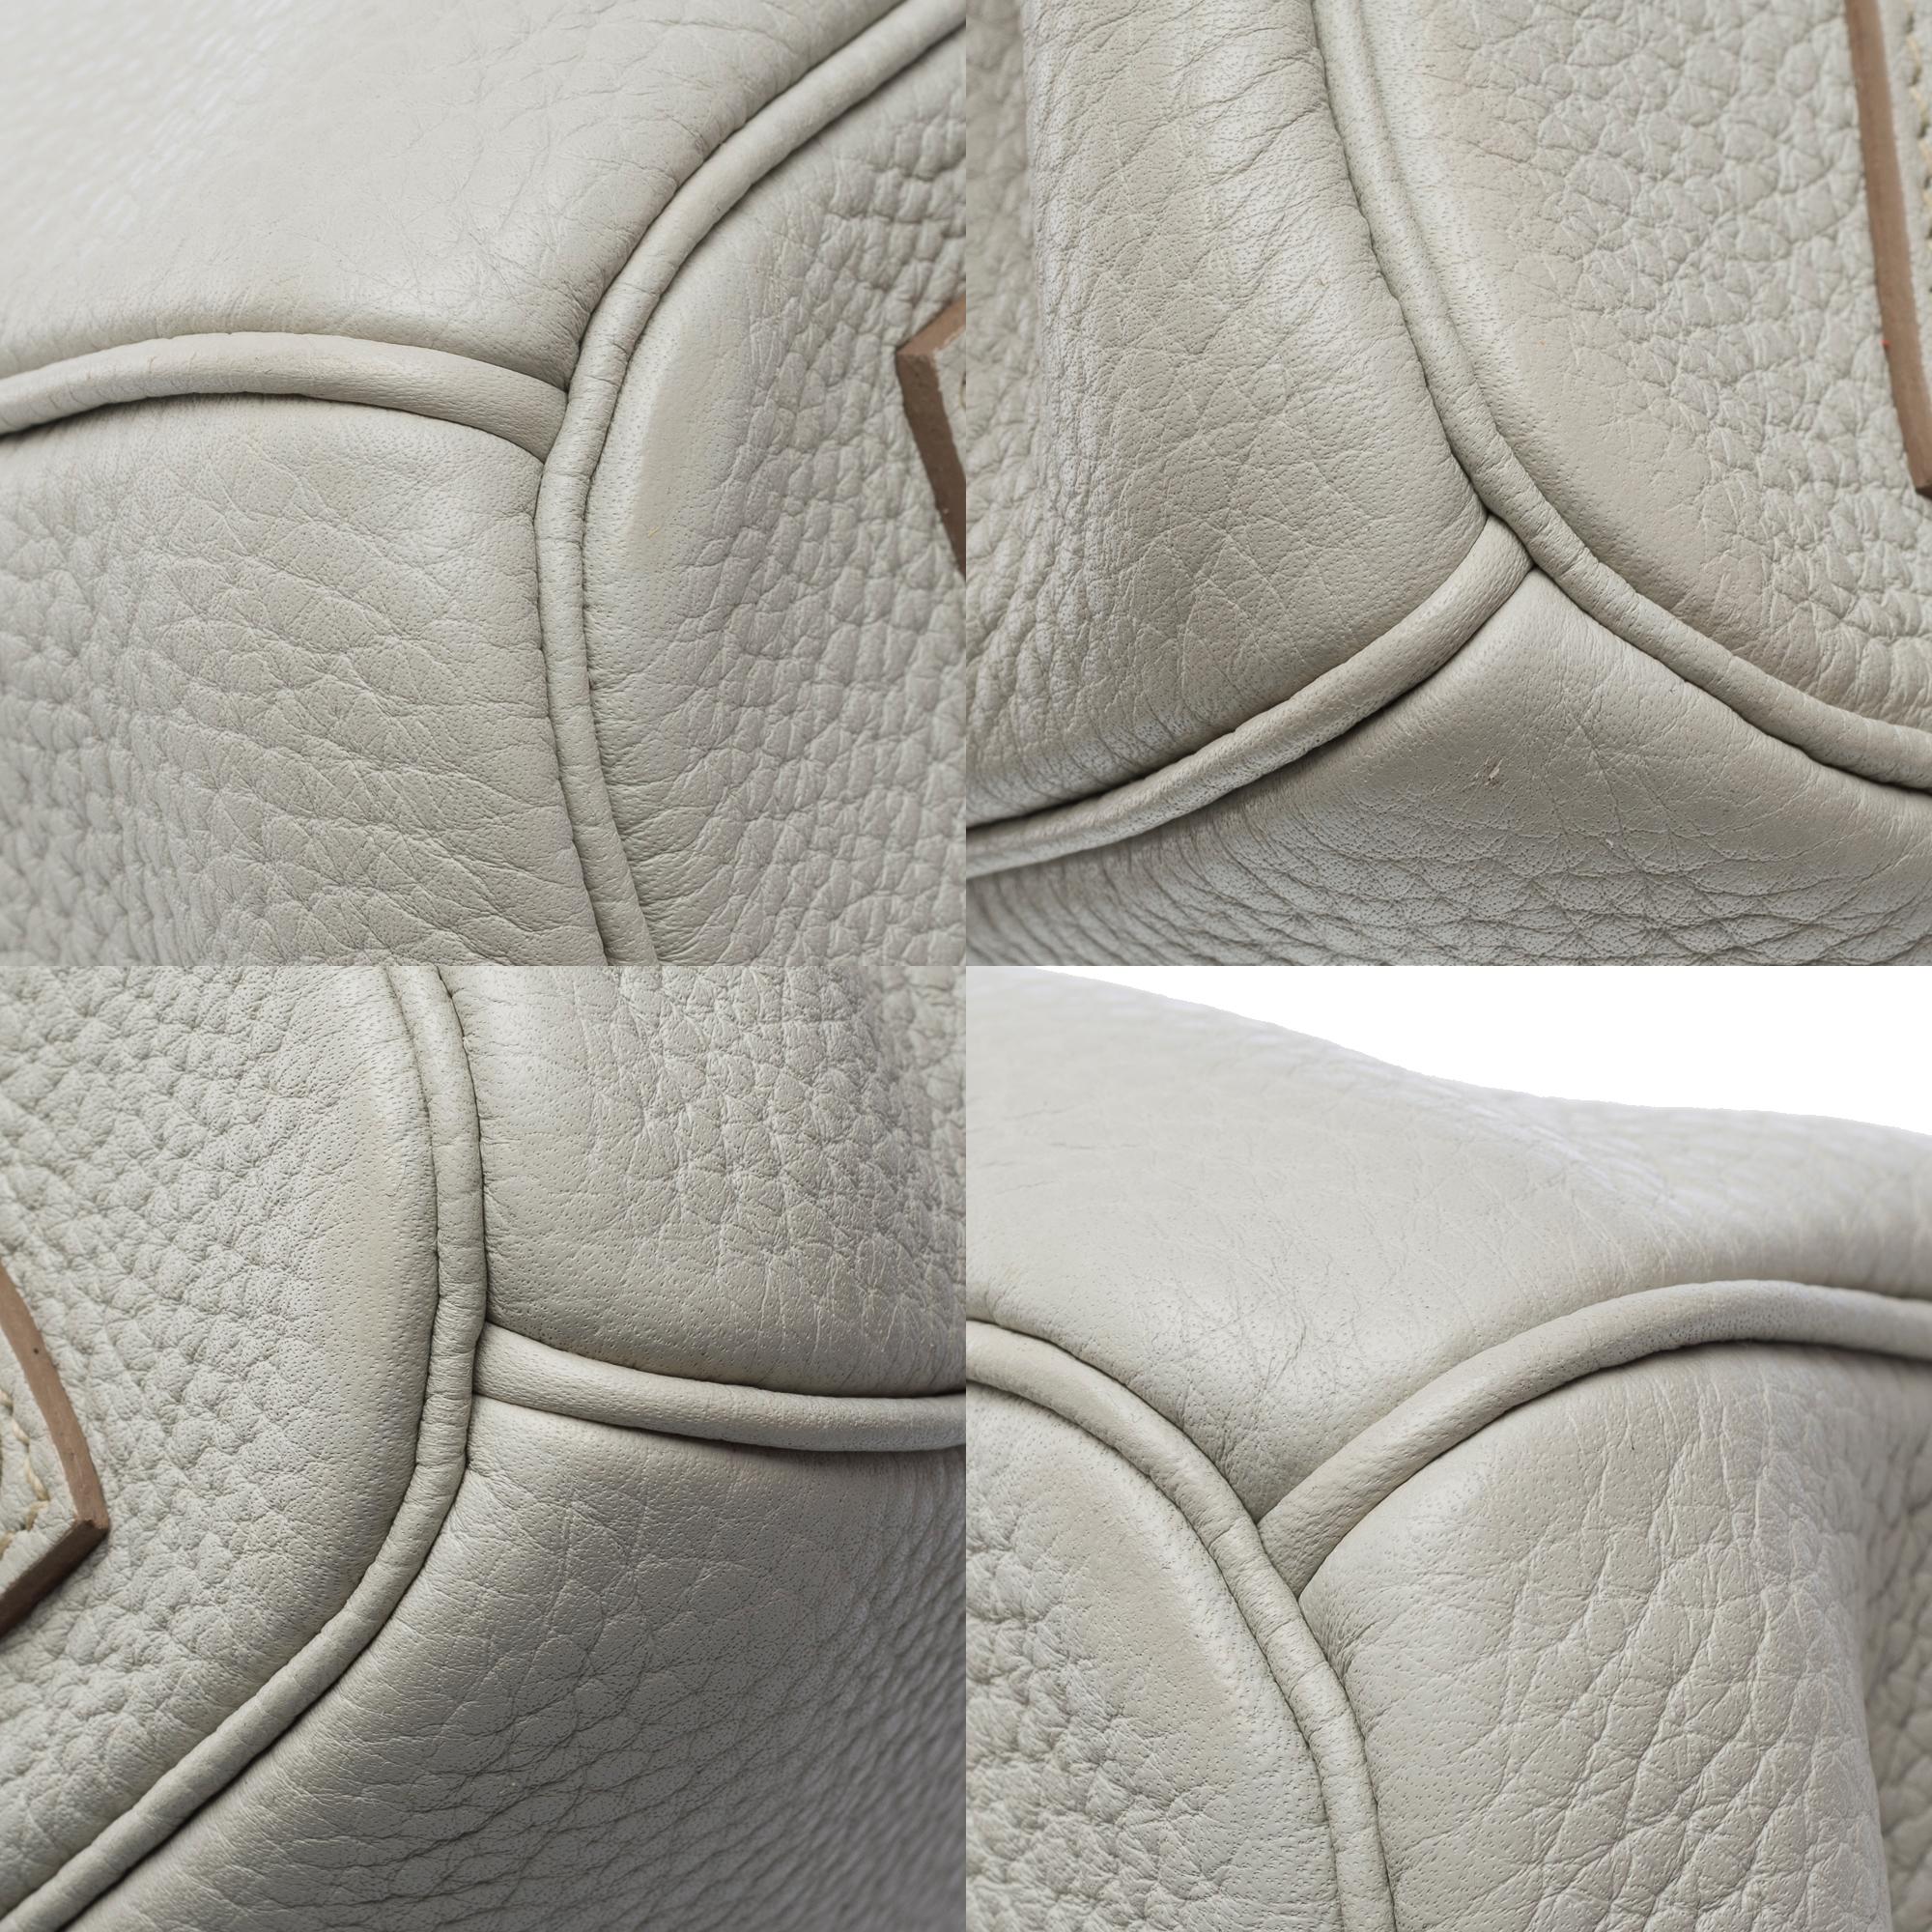 Rare Hermès Birkin Club 35 handbag in grey, white leather and blue lizard, SHW For Sale 9